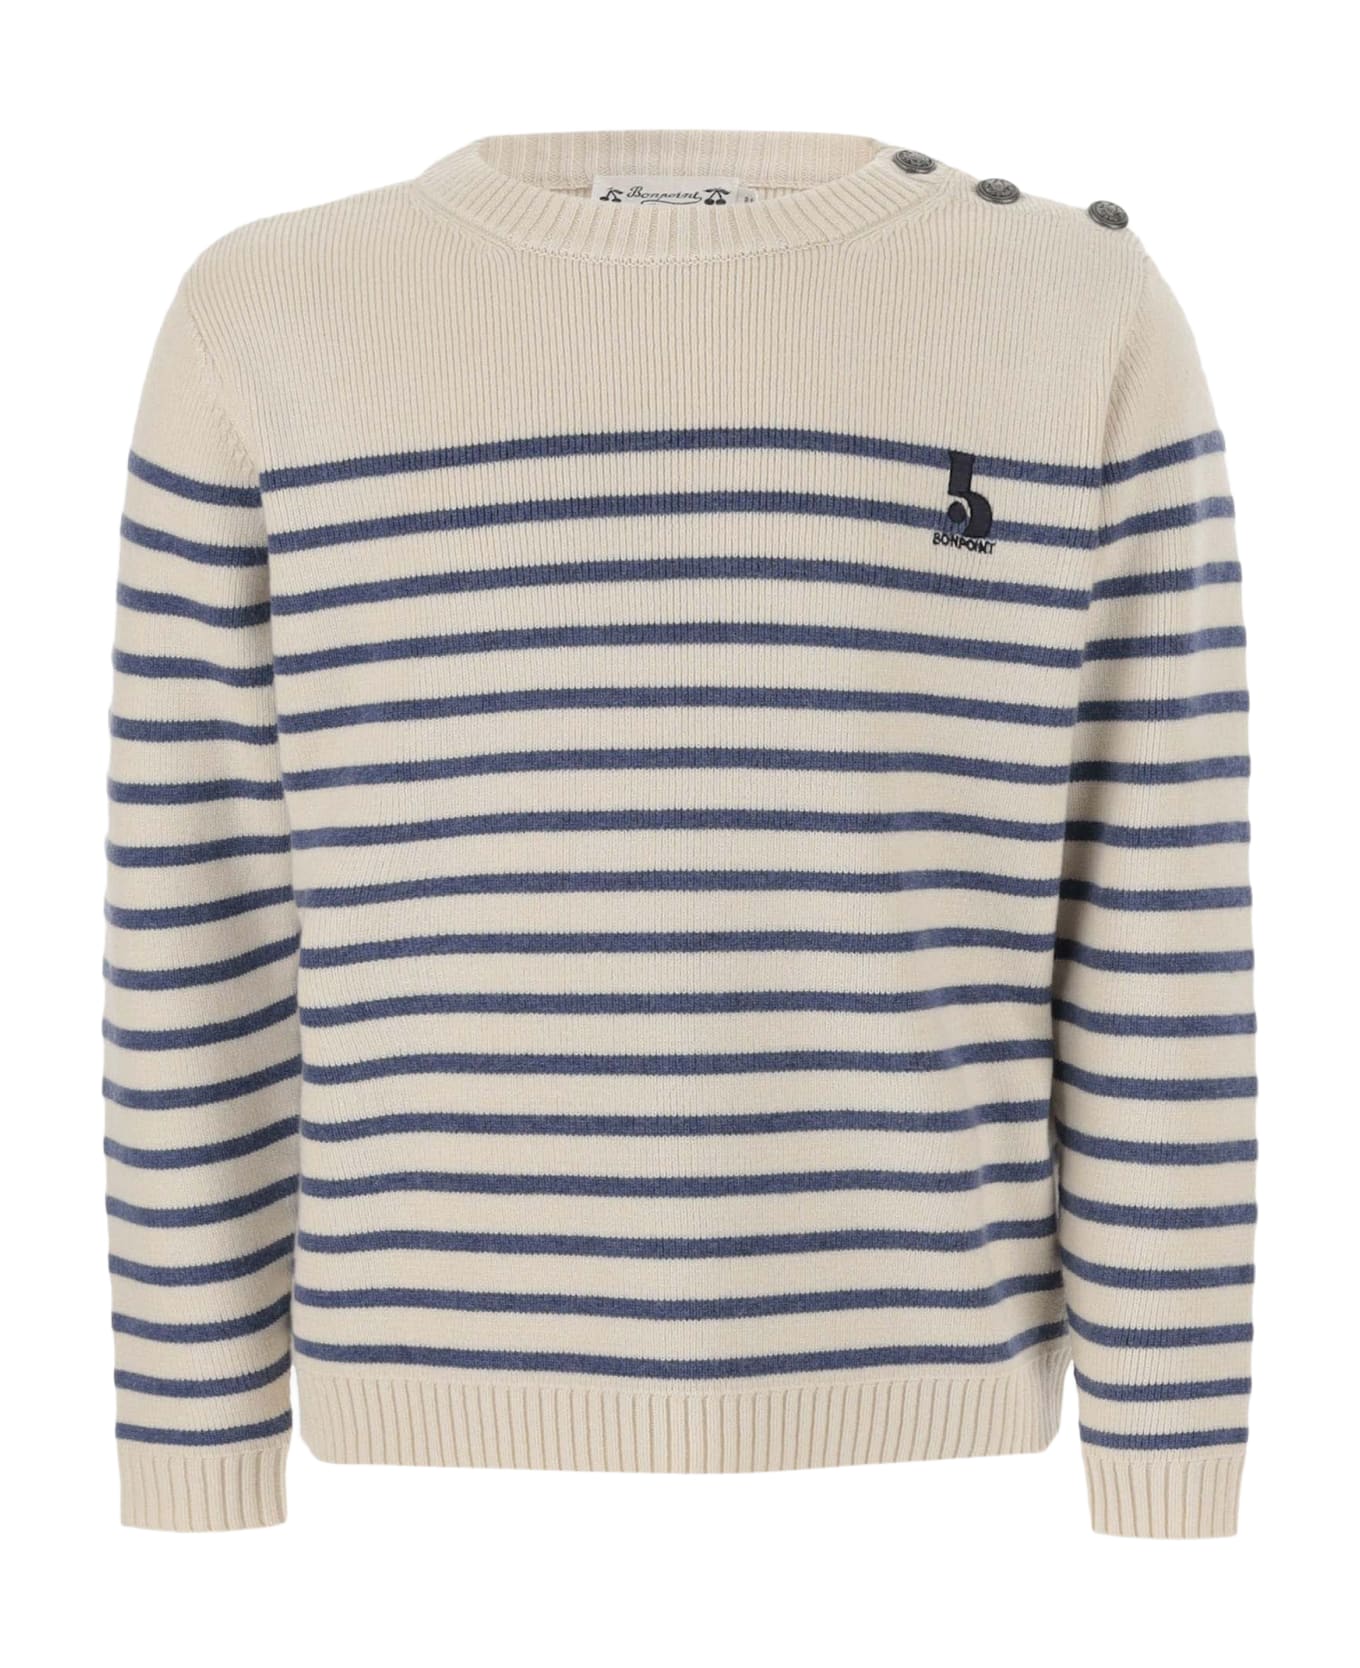 Bonpoint Striped Wool Blend Sweater - Blue